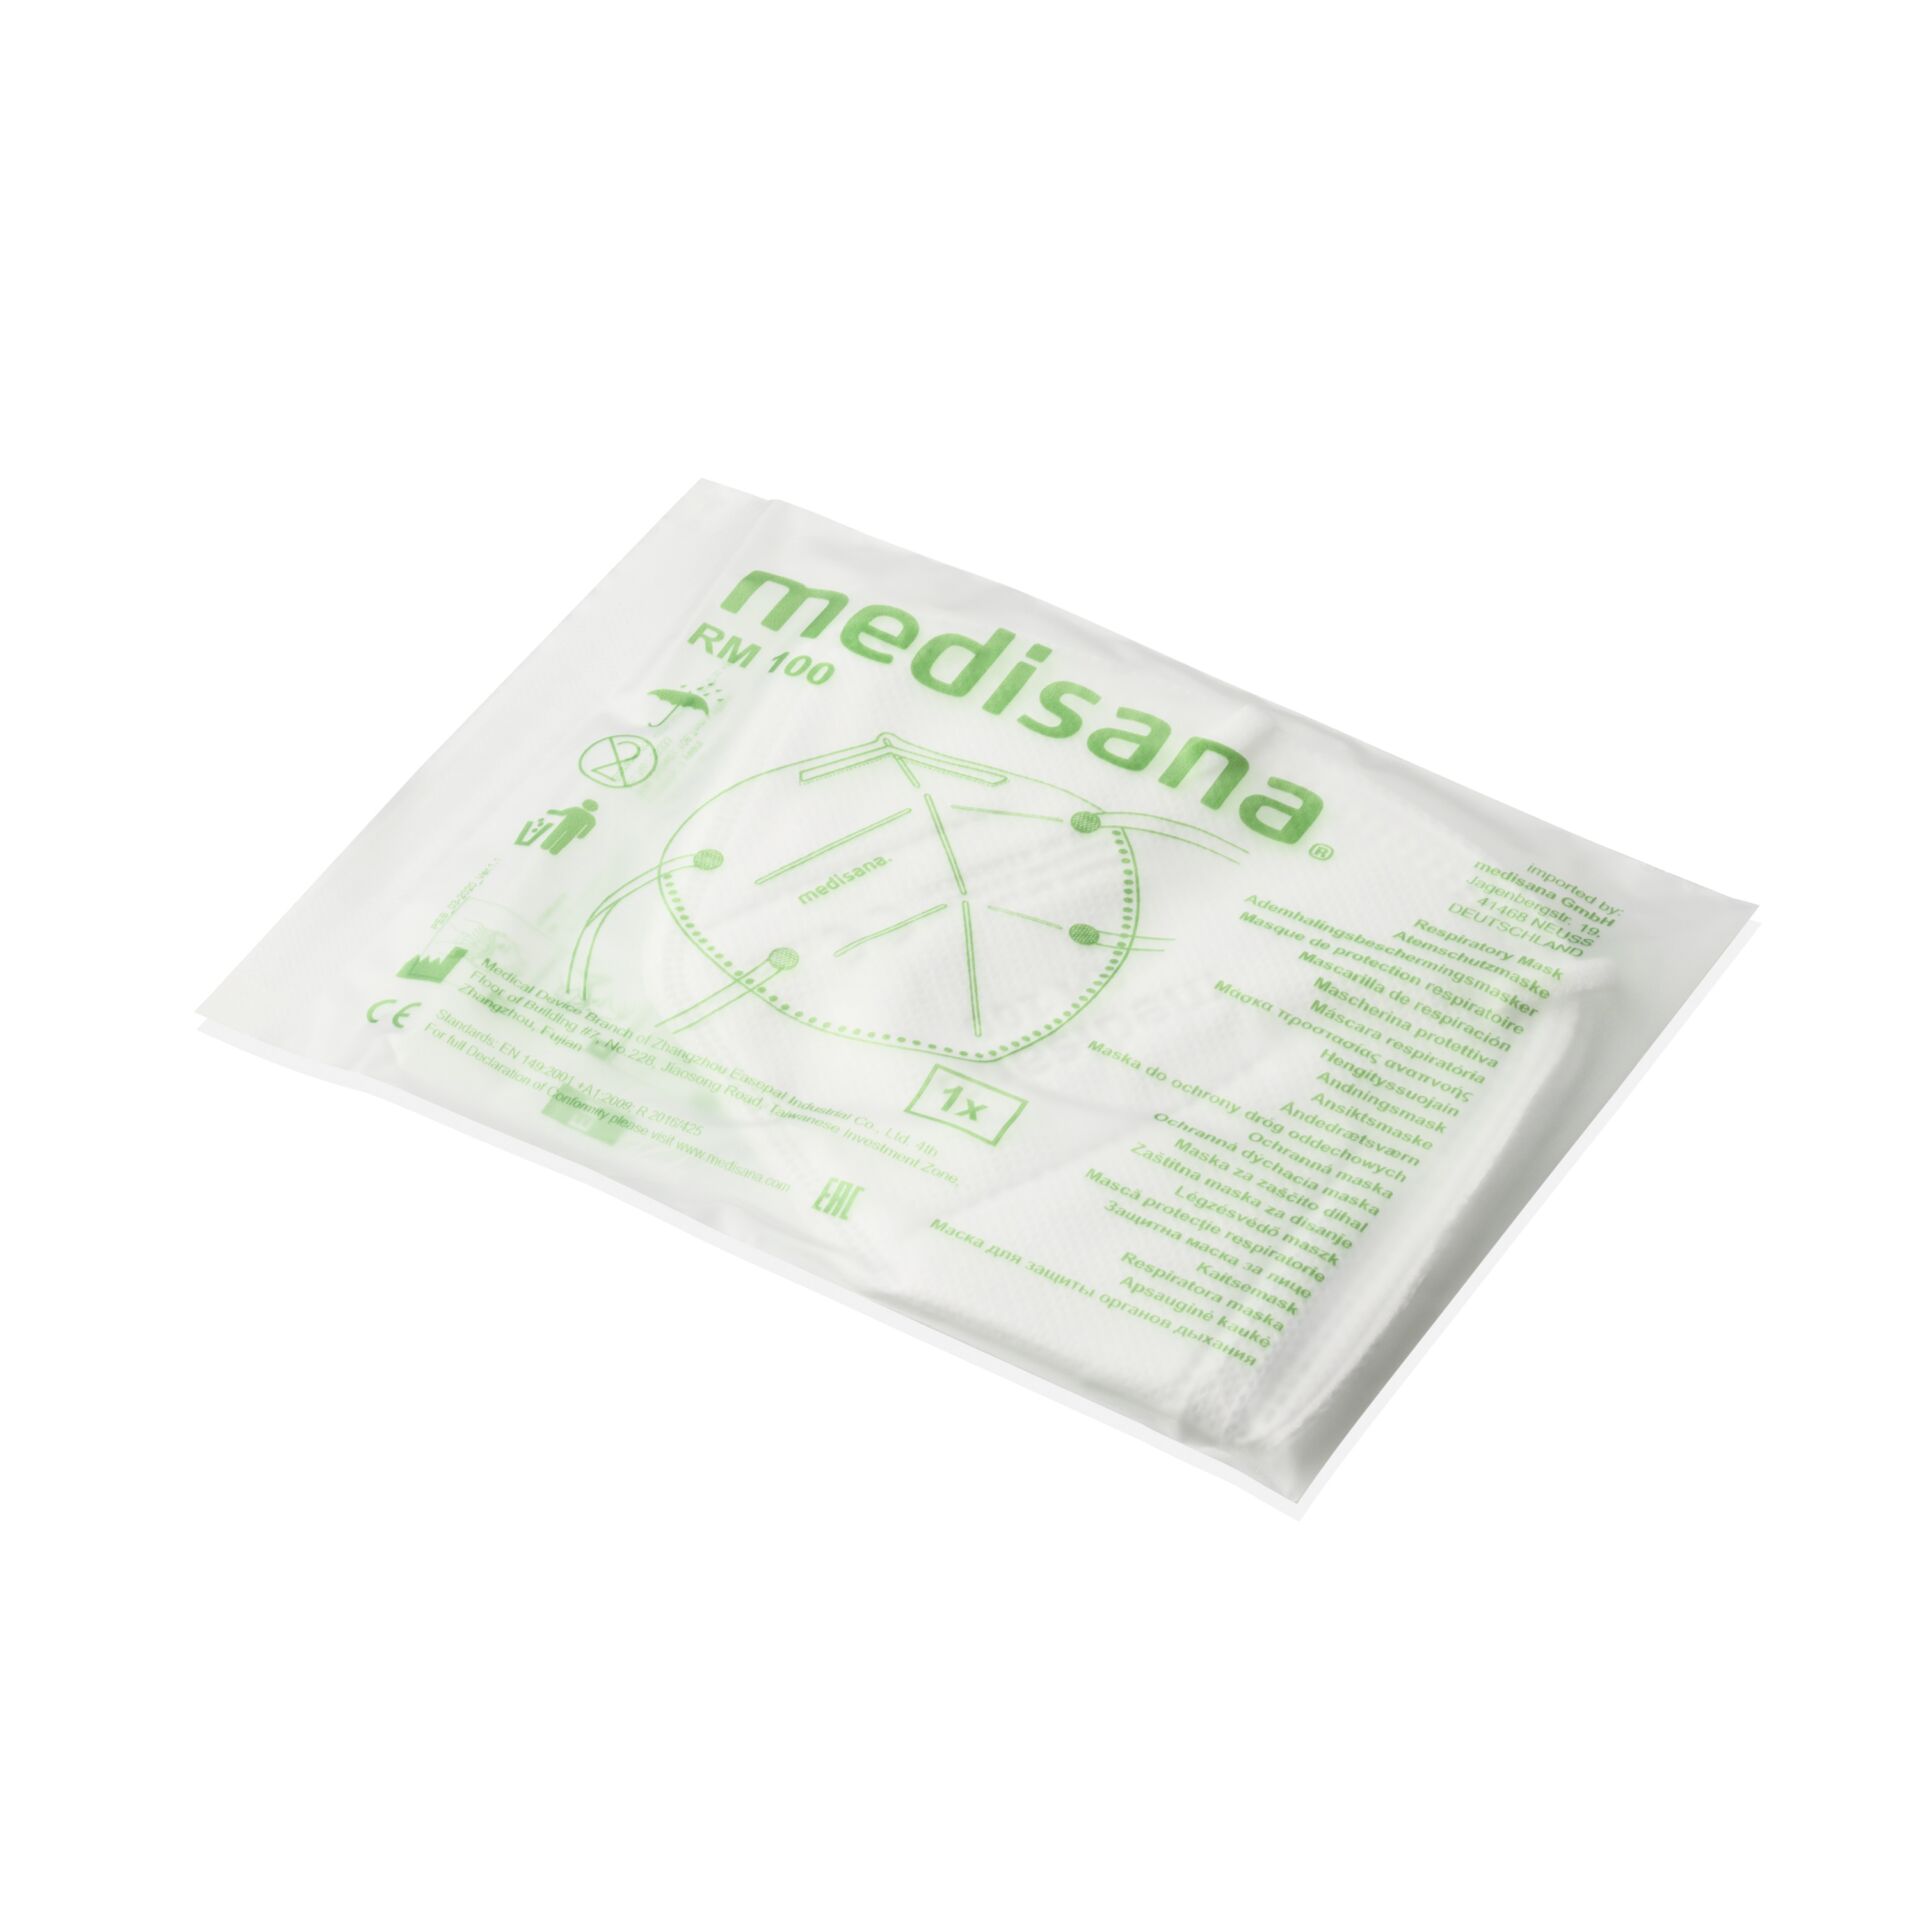 X FFP2 Atemschutzmaske -Medisana 10 -RM 100 Medisana Hardware/Electronic